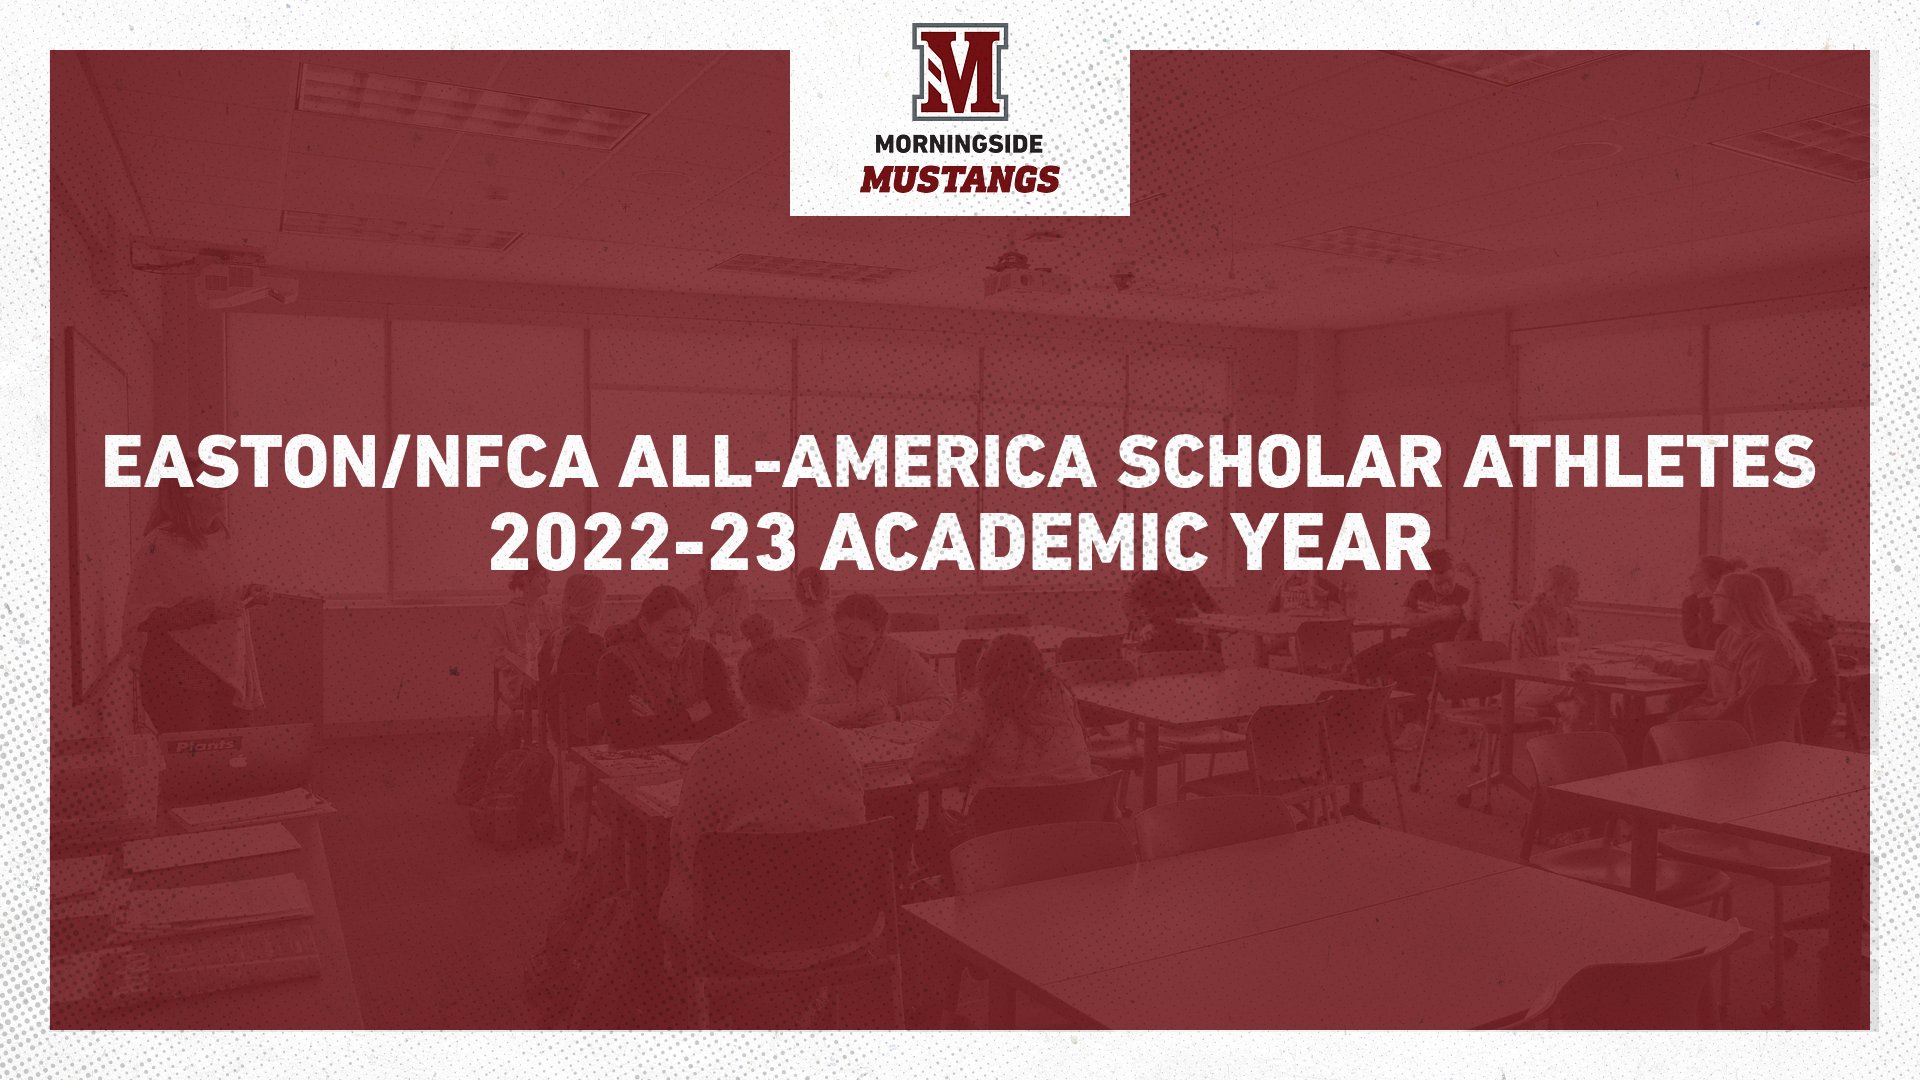 Morningside softball lands 11 Easton/NFCA All-America Scholar Athletes